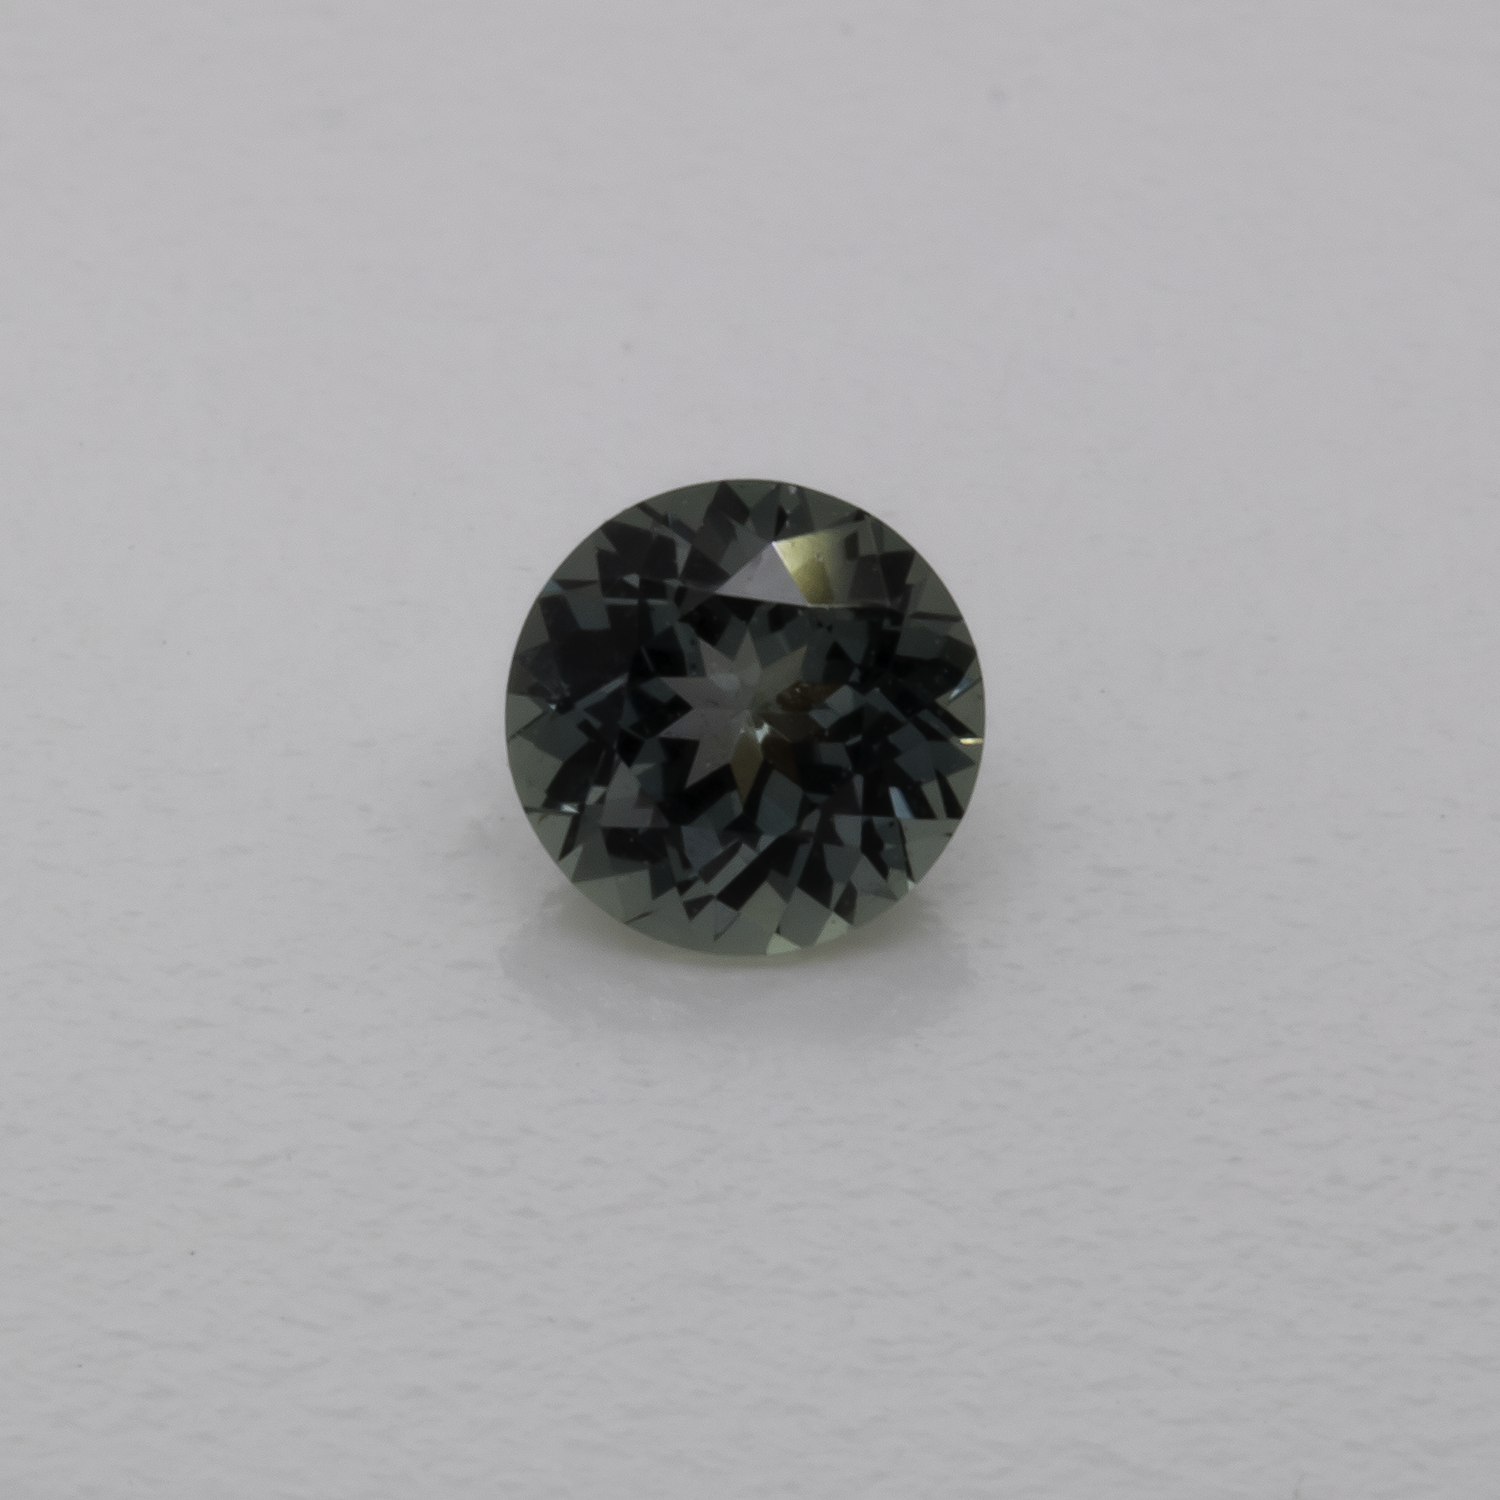 Saphir - blau/grün, rund, 4x4 mm, 0,30 cts, Nr. XSR11206